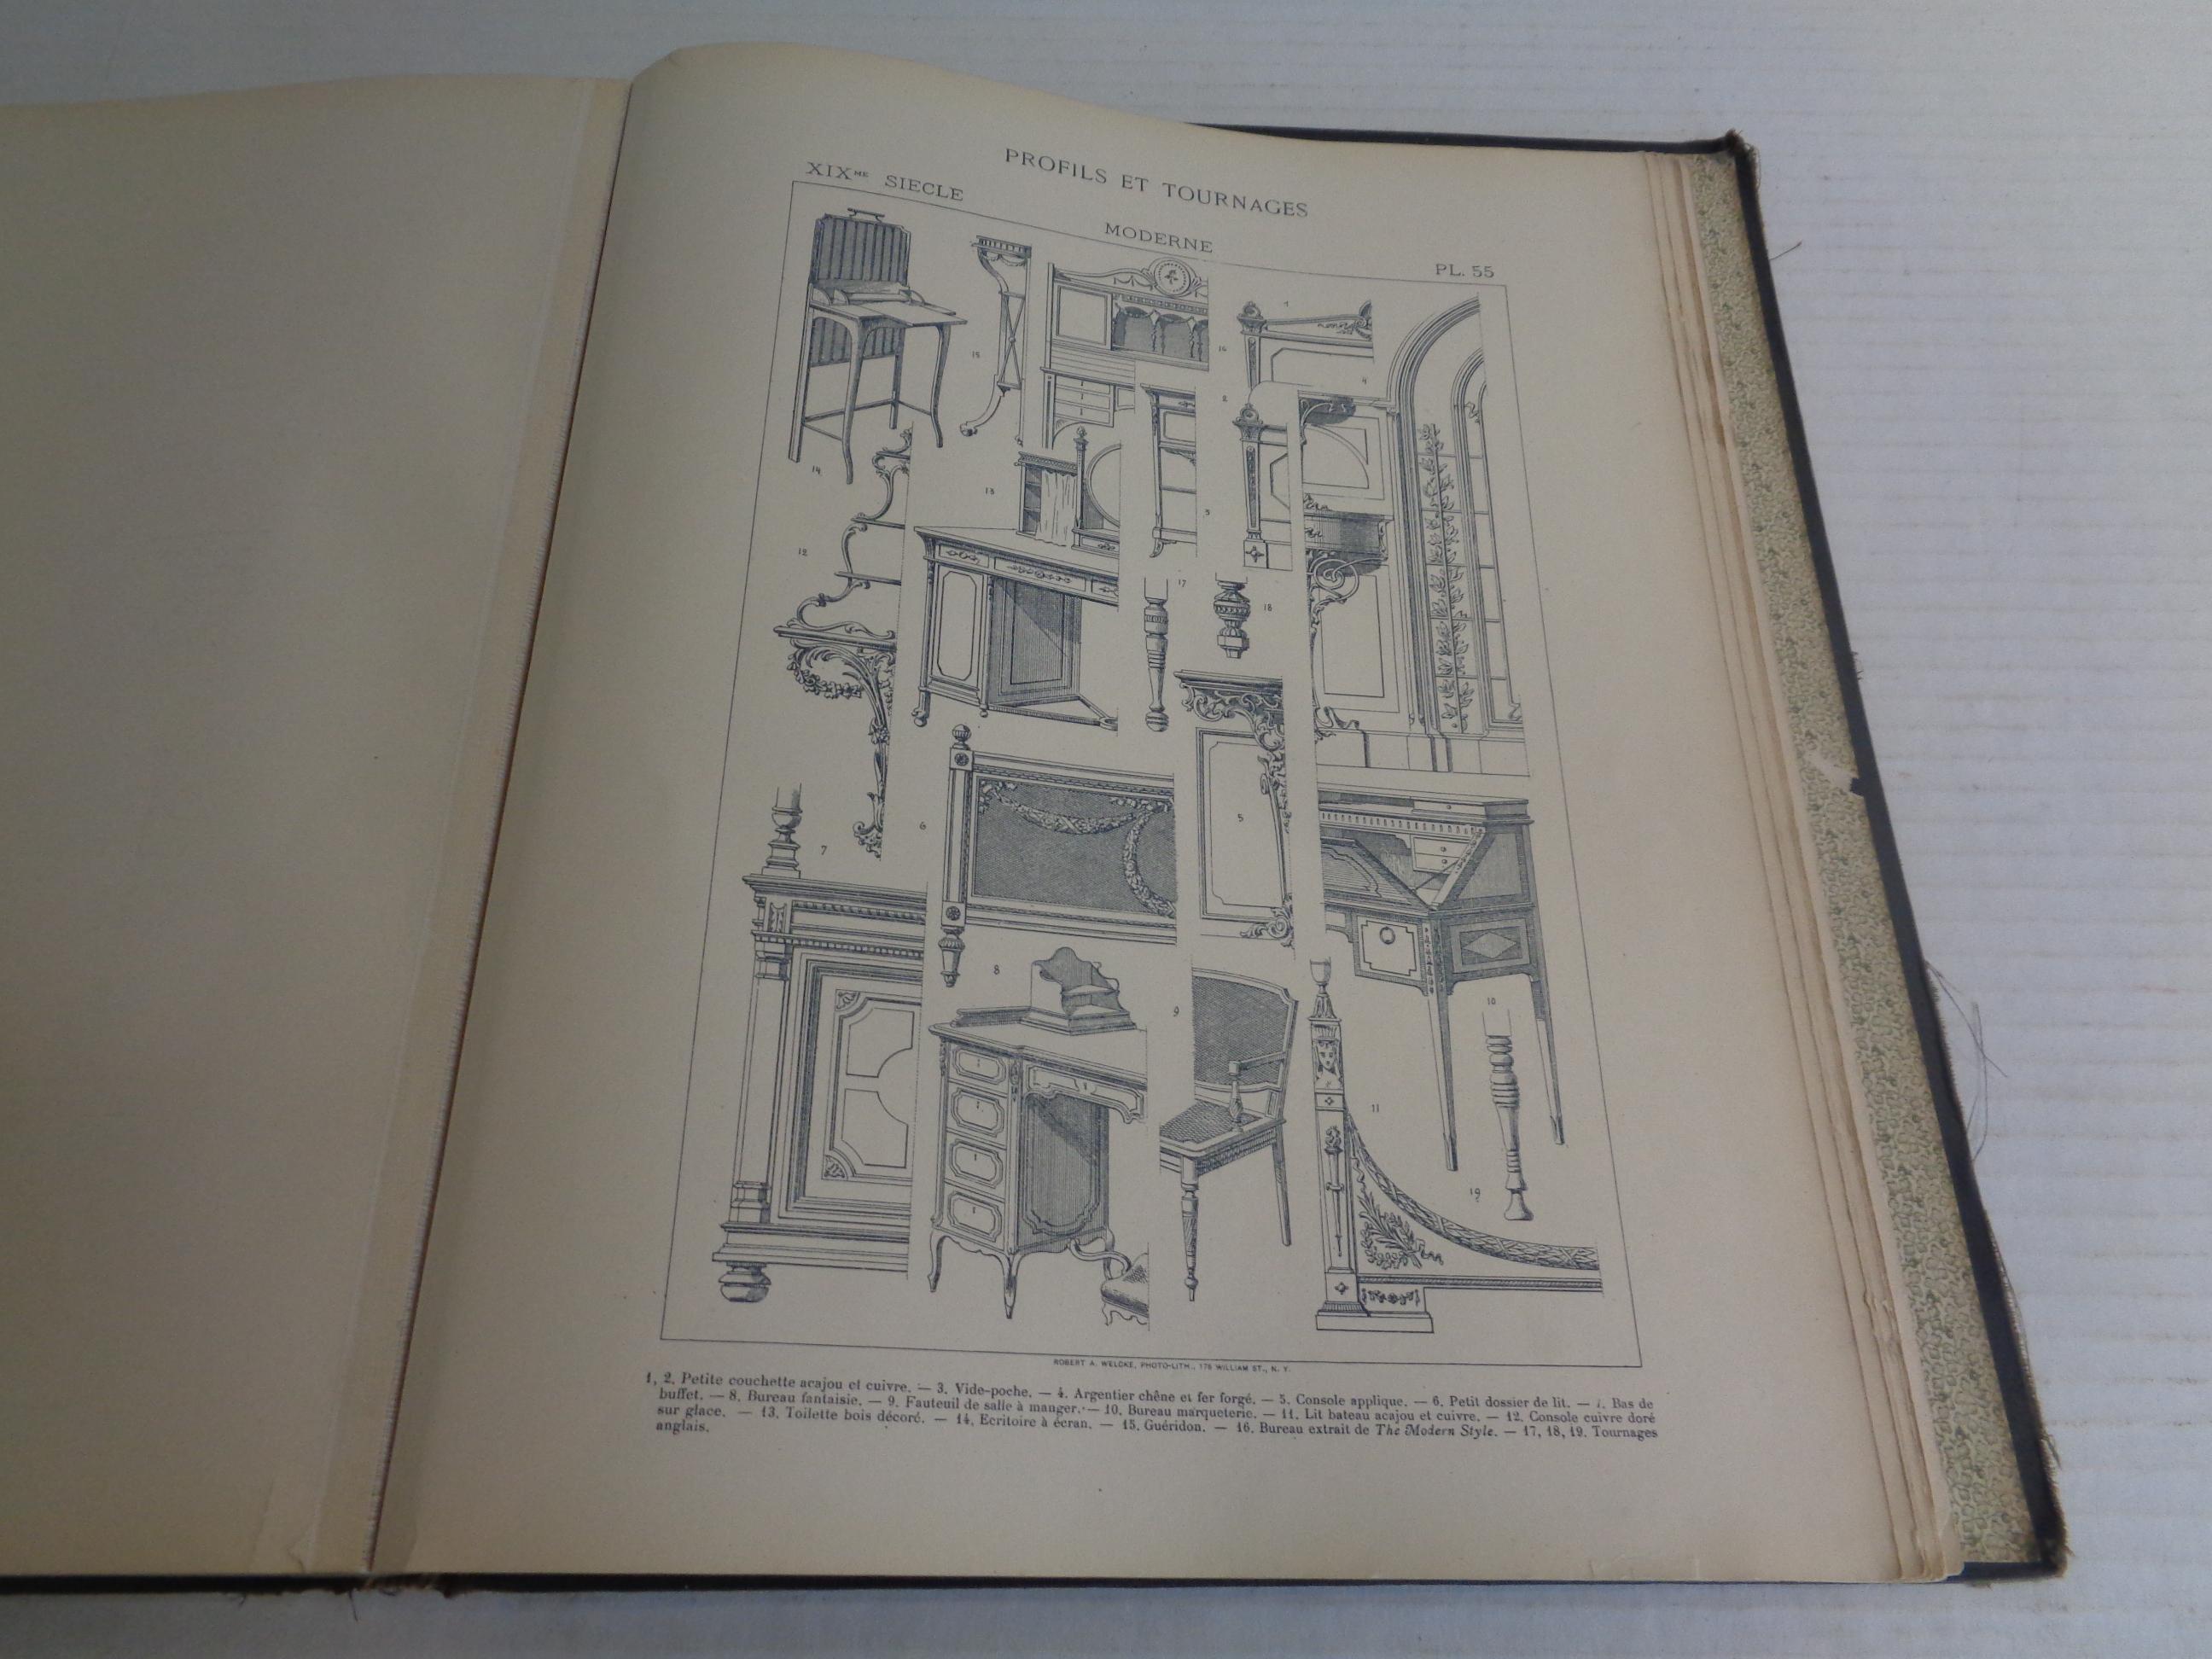  FRENCH STYLES: Furniture & Architecture - Bajot, Paris - 19th C. Folio Book For Sale 8